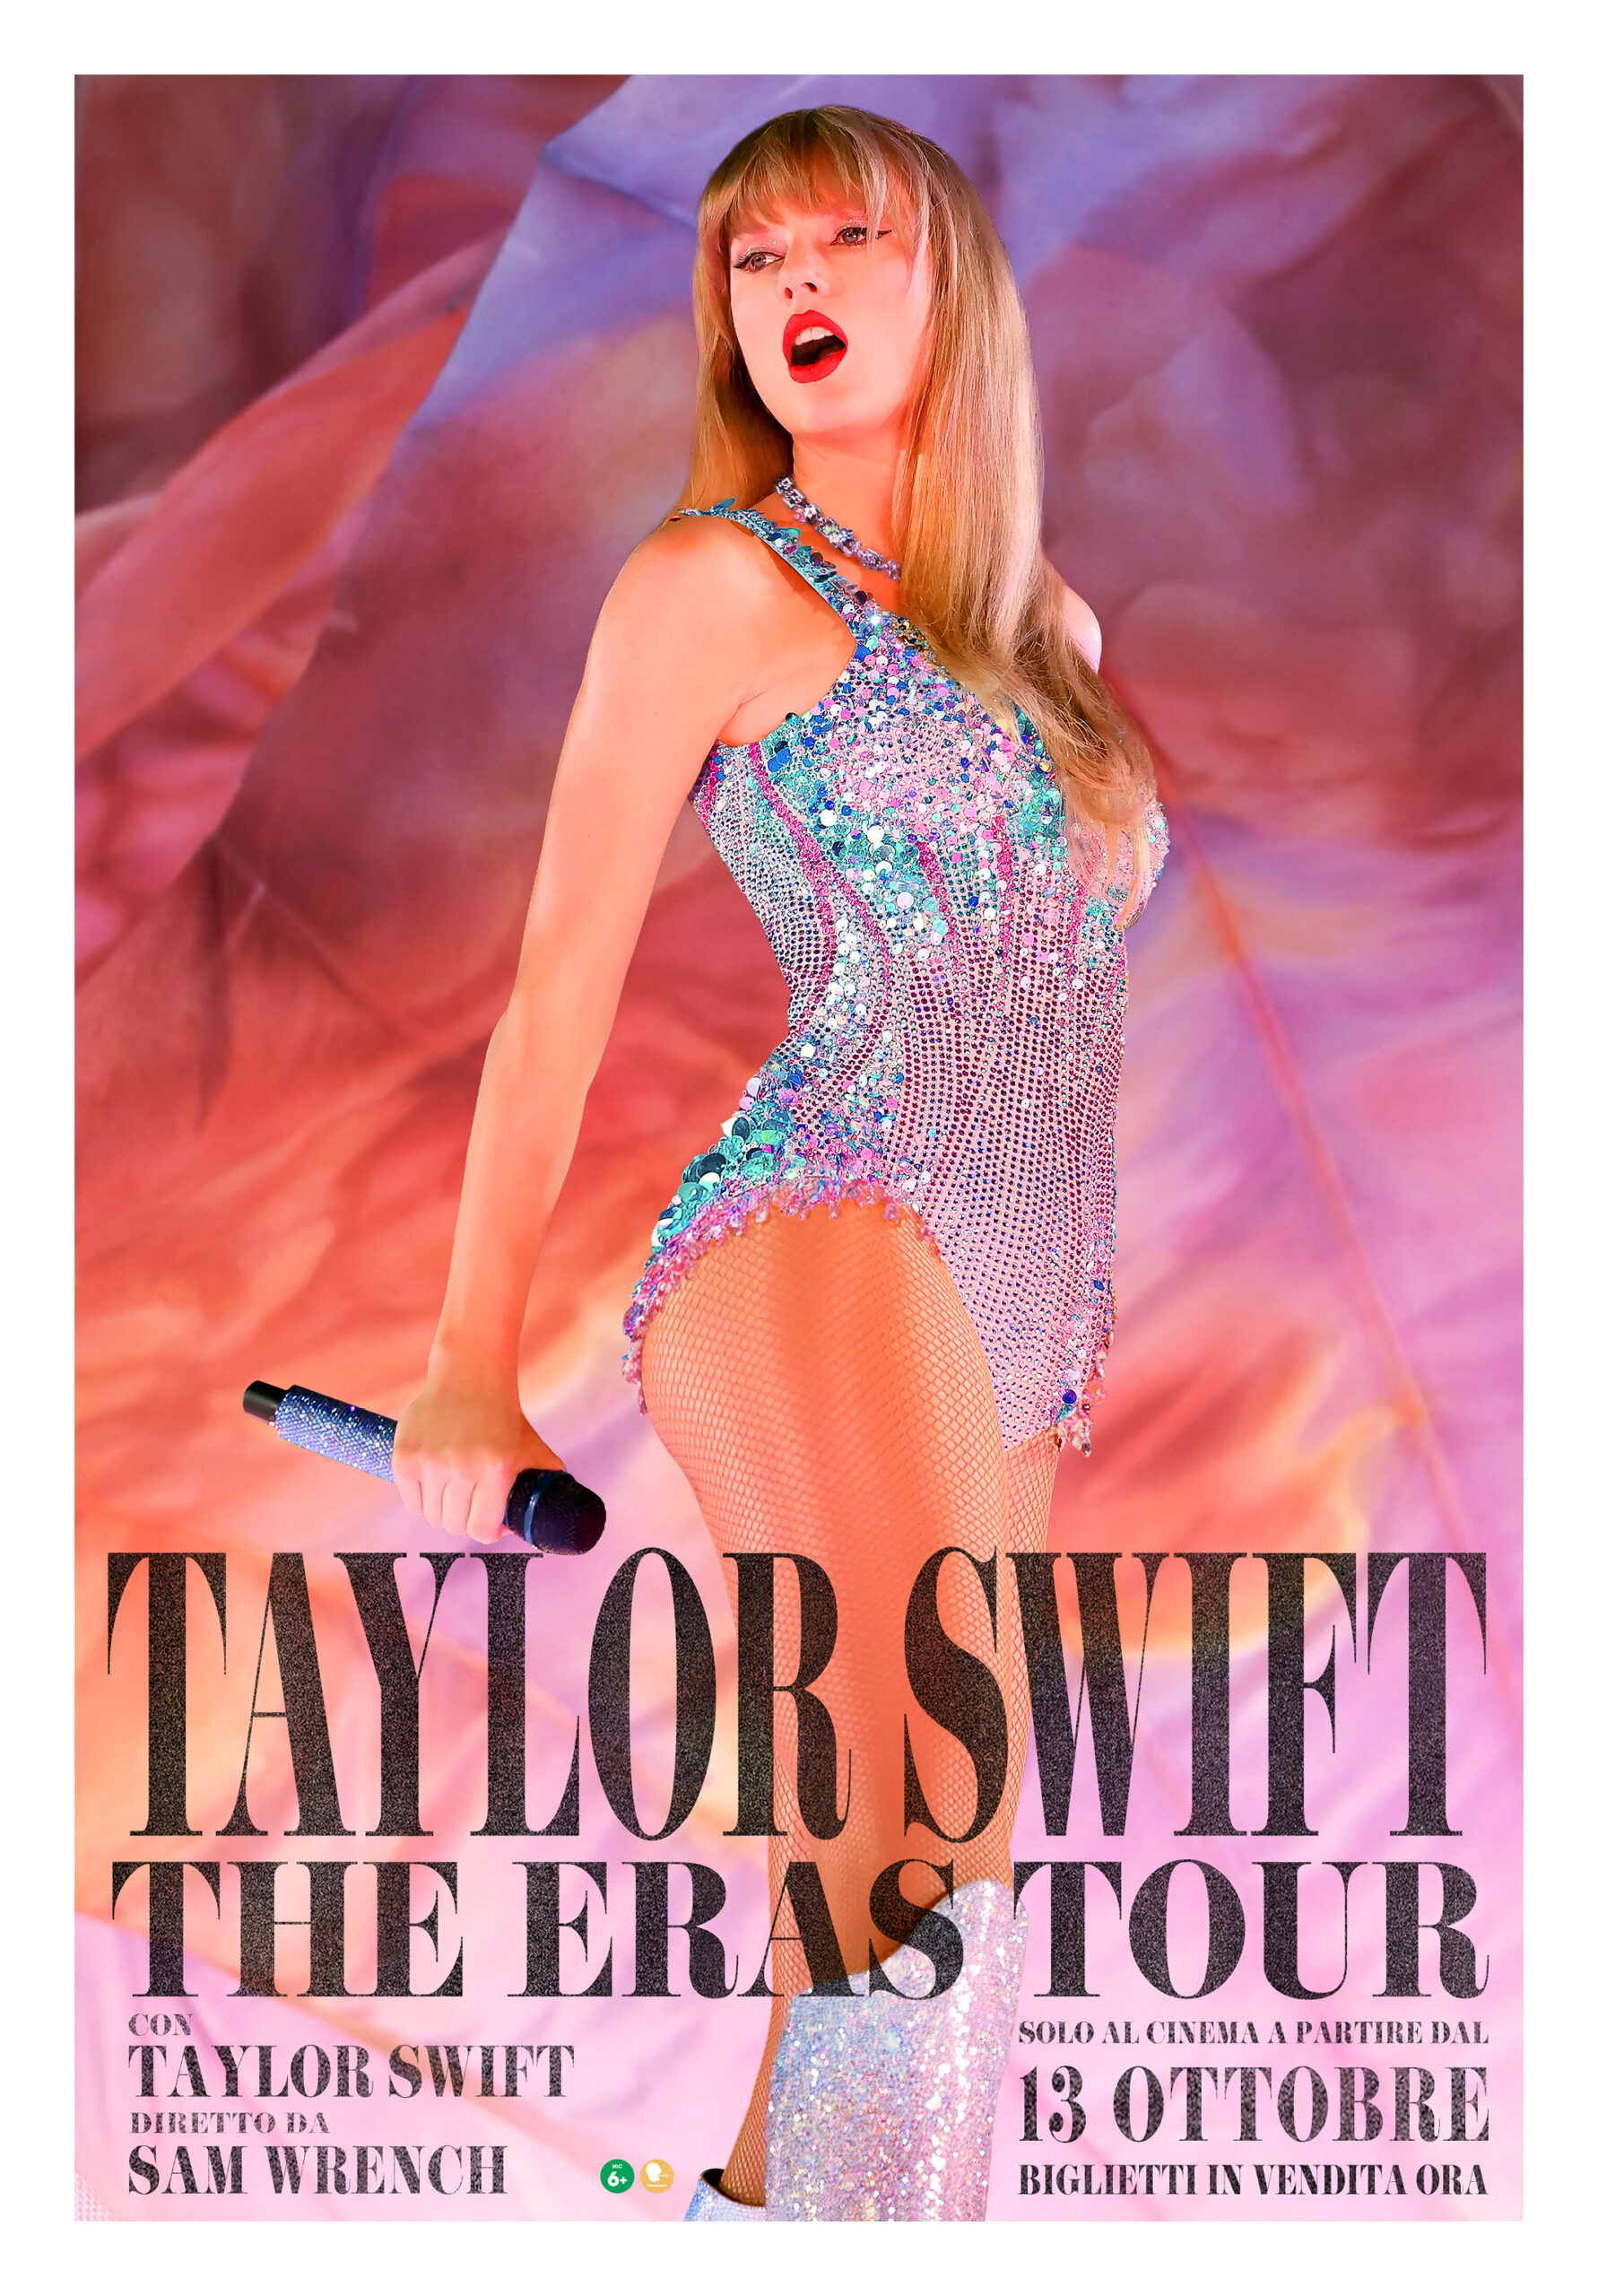 Taylor Swift al cinema con TAYLOR SWIFT THE ERAS TOUR - CorriereNerd.it